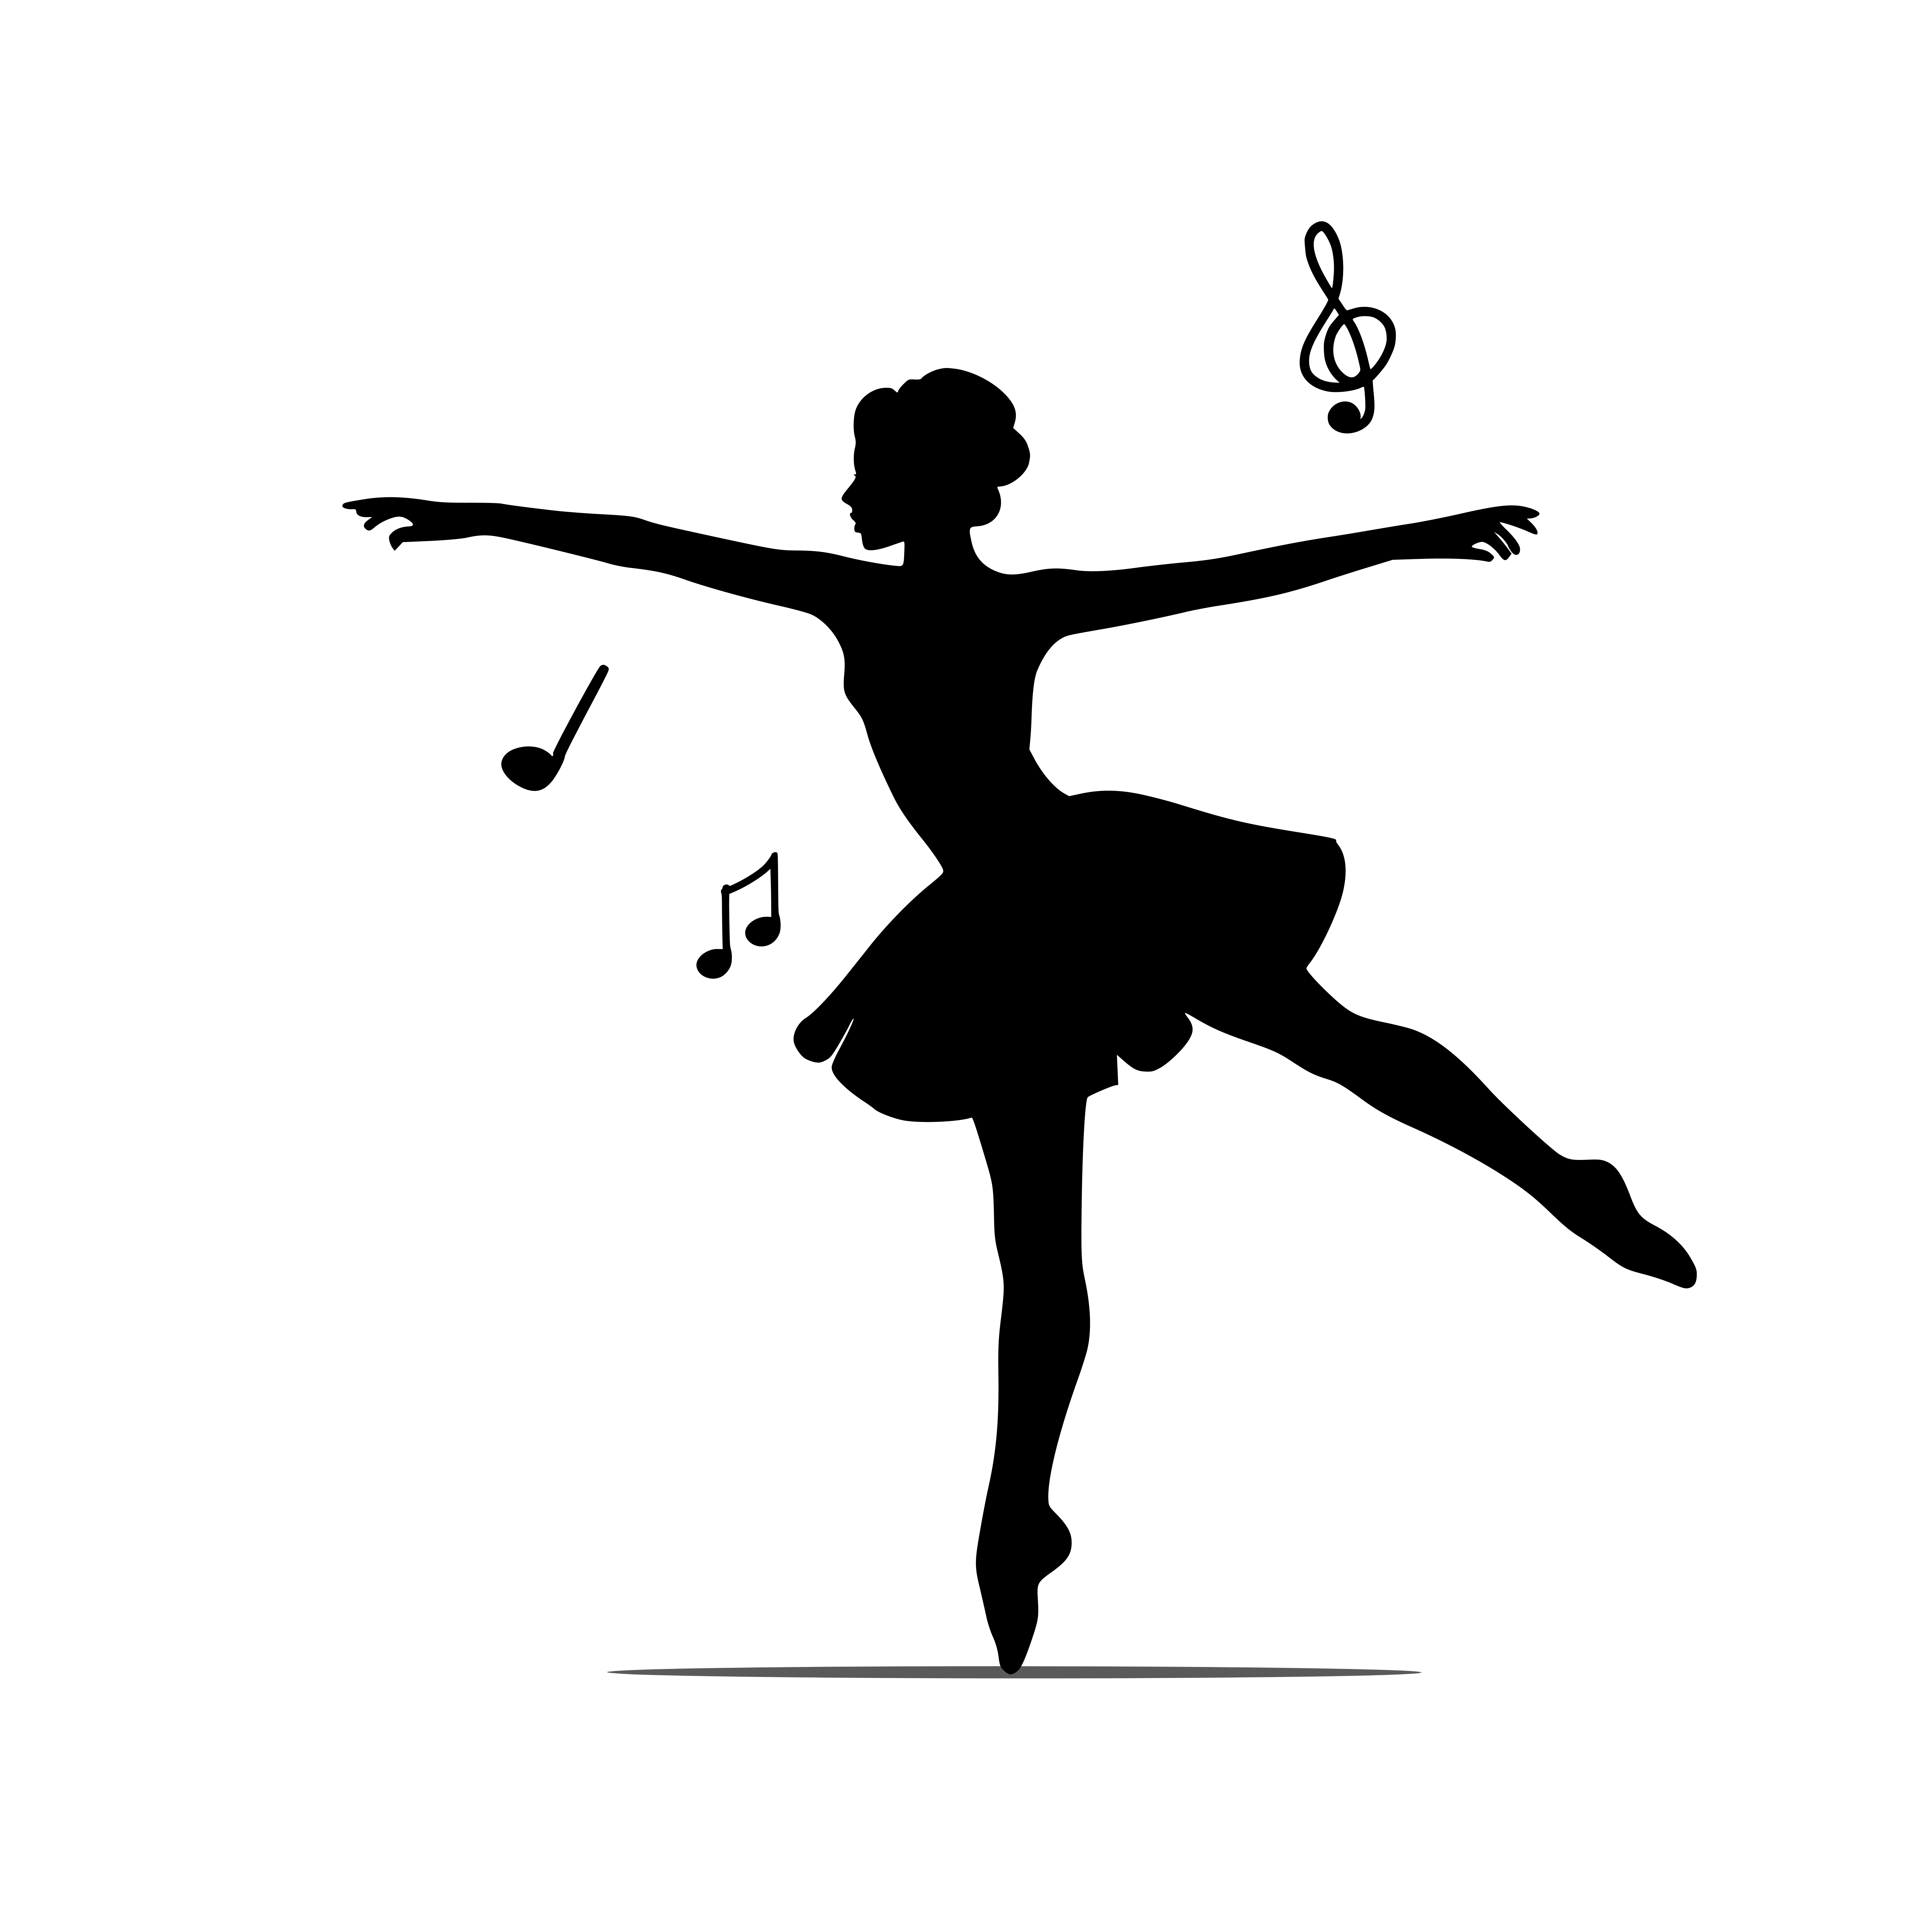 Ballet dancer silhouette design